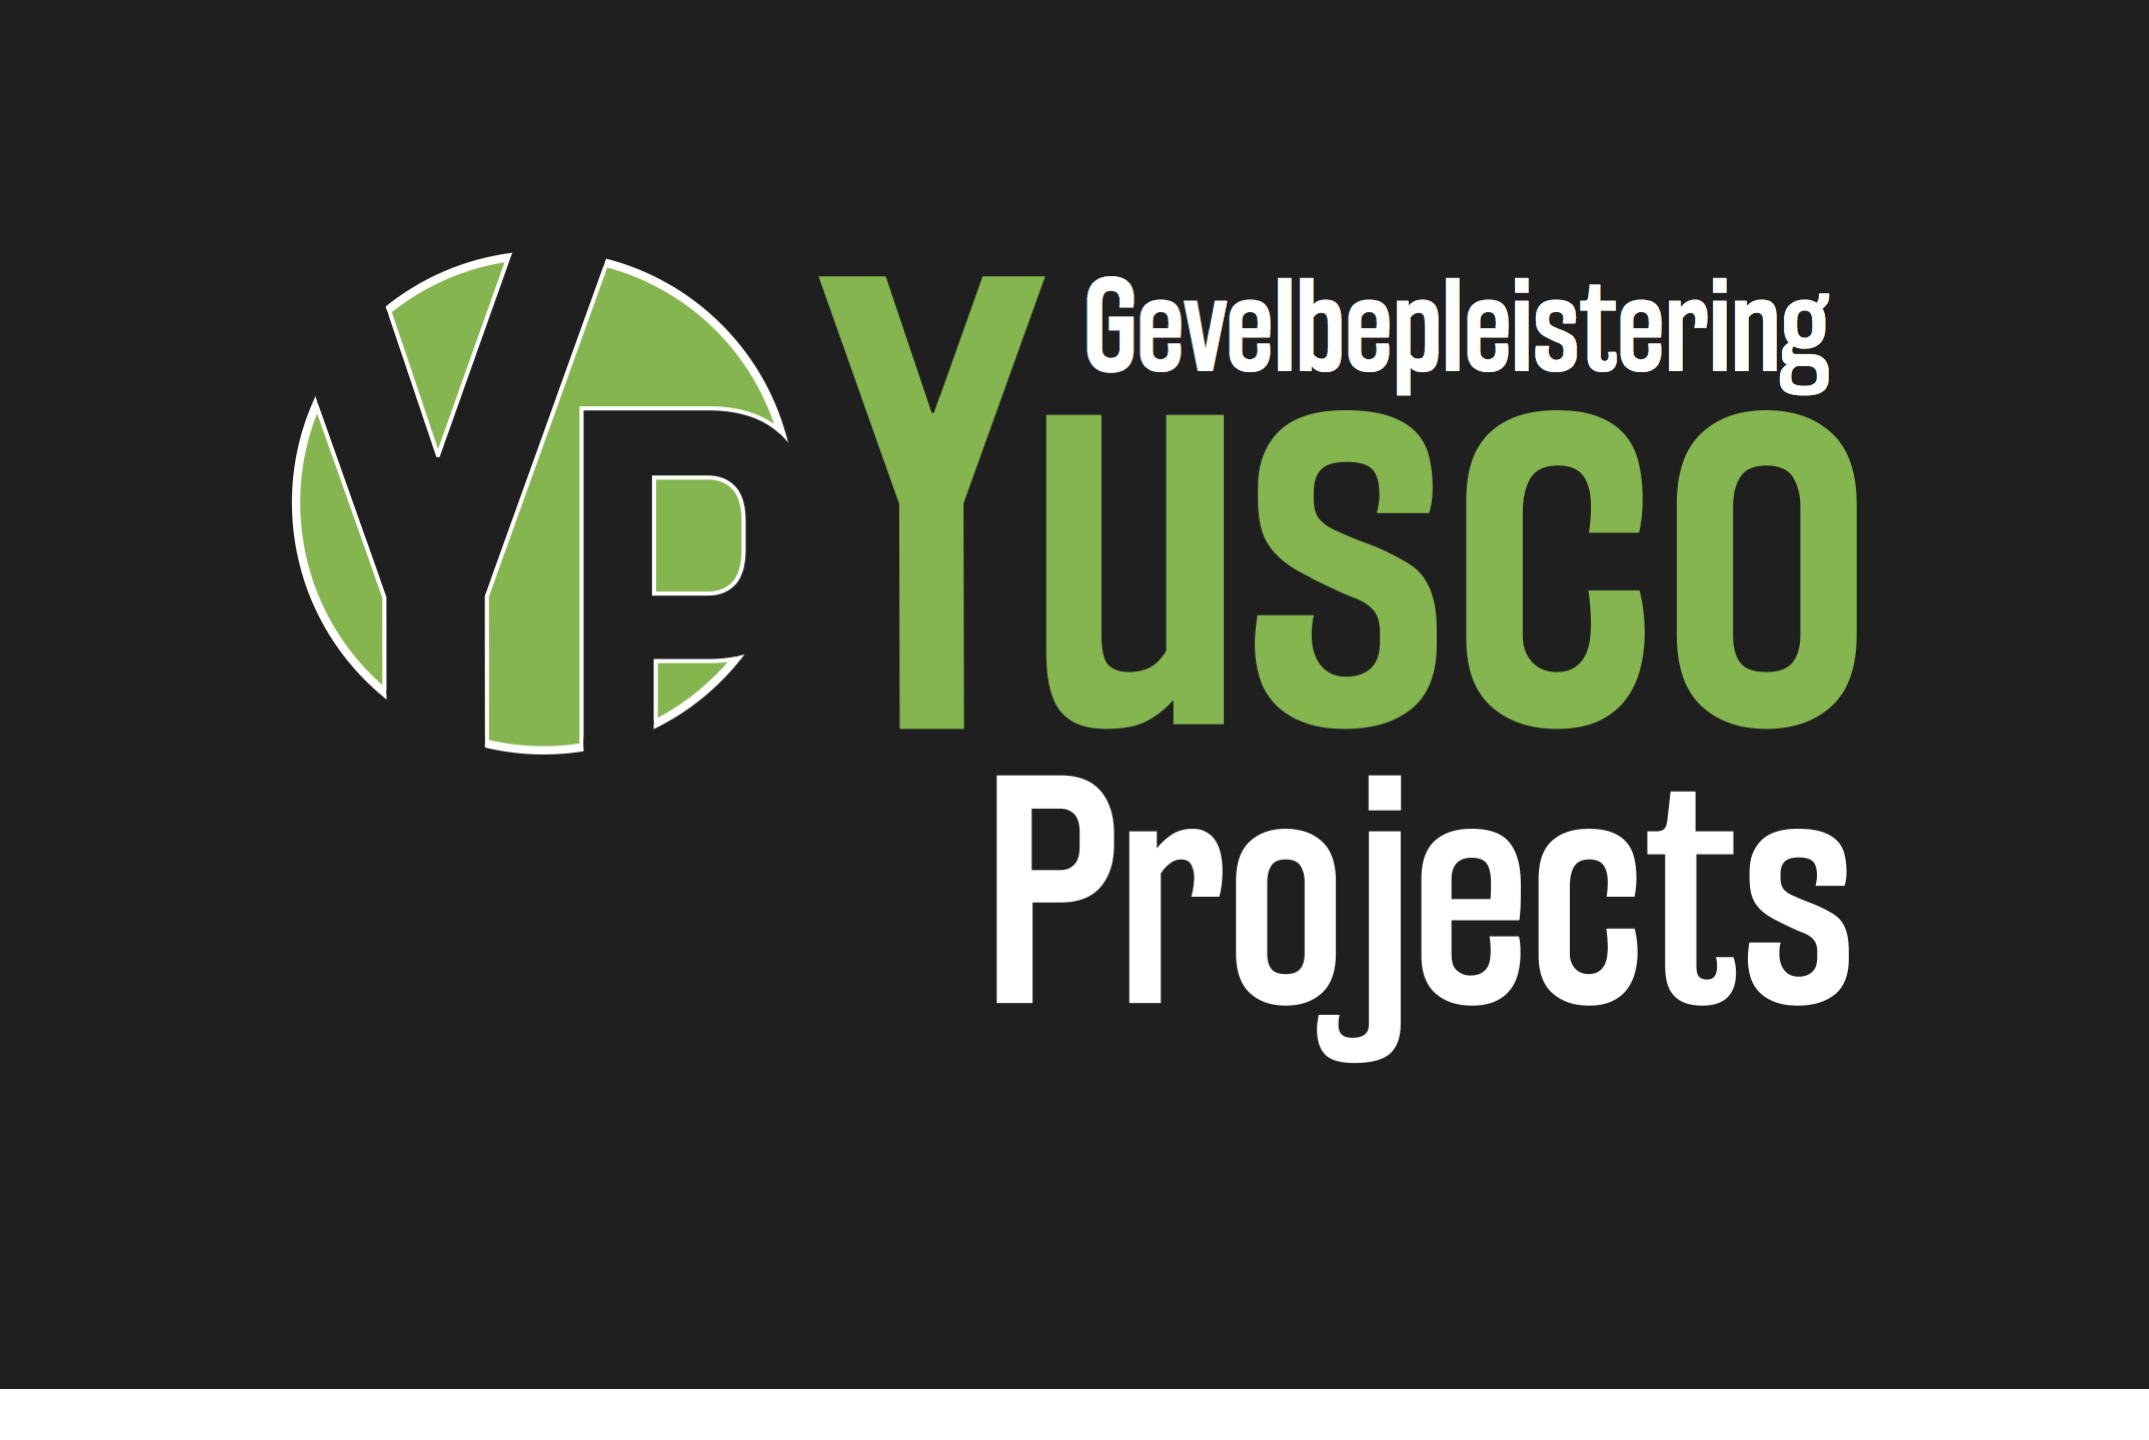 gevelrenovateurs Gentbrugge Yusco Projects Gevelbepleistering